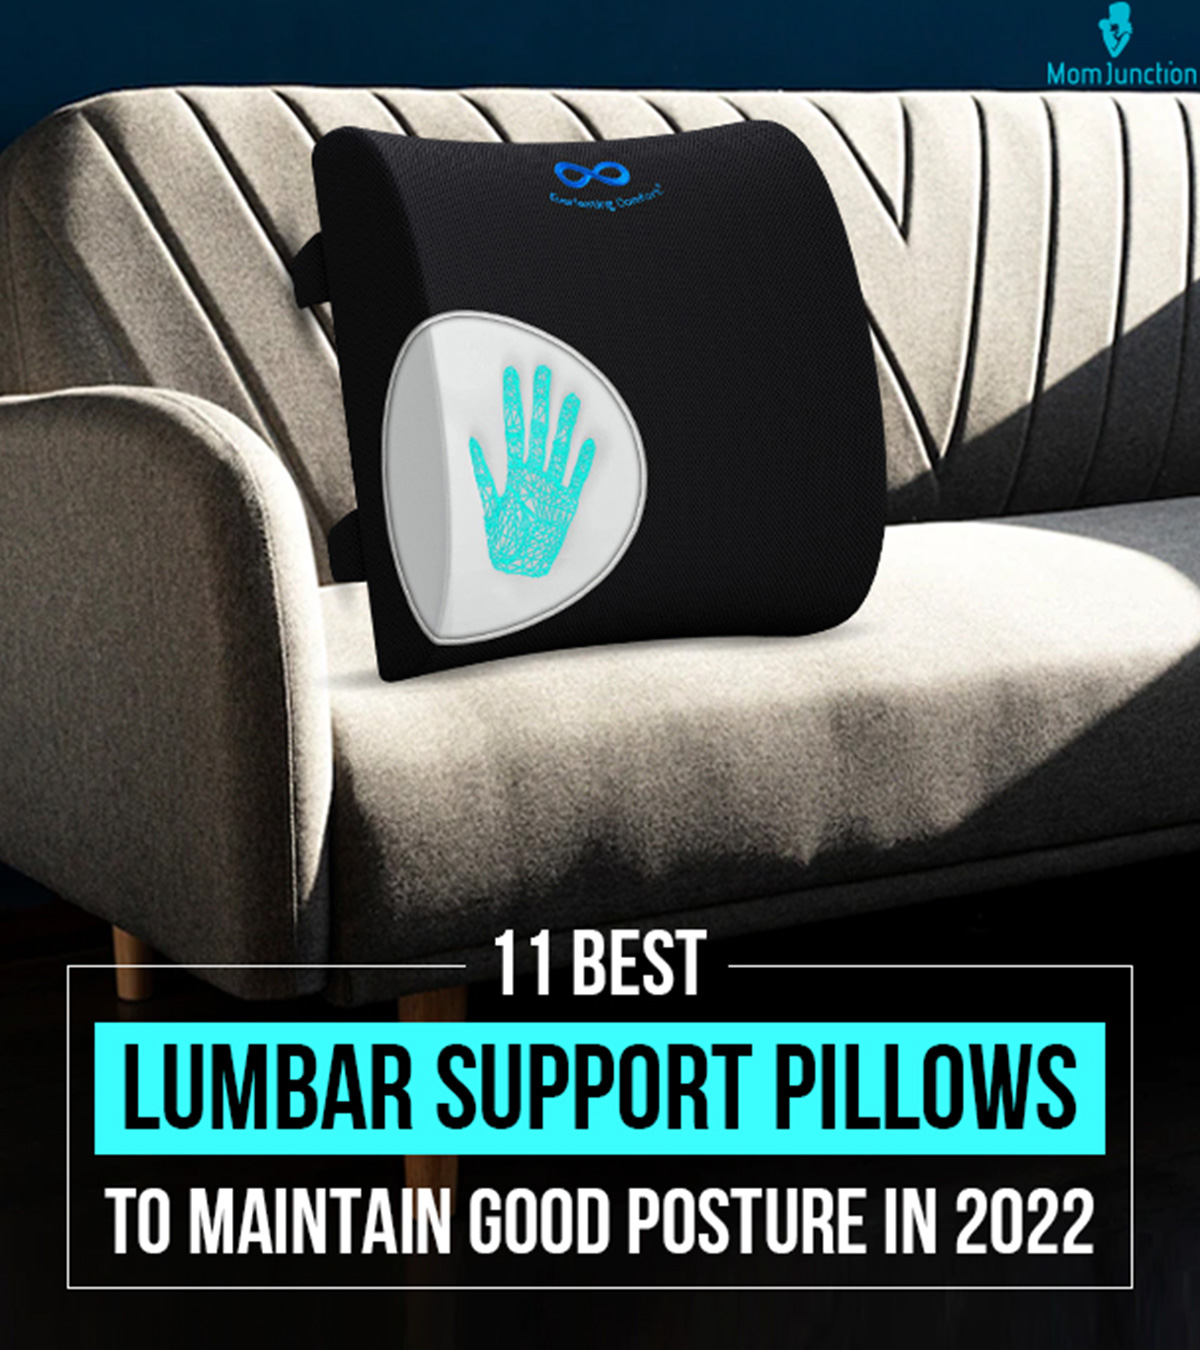 https://www.momjunction.com/wp-content/uploads/2022/04/Lumbar-Support-Pillows-To-Maintain-Good.jpg